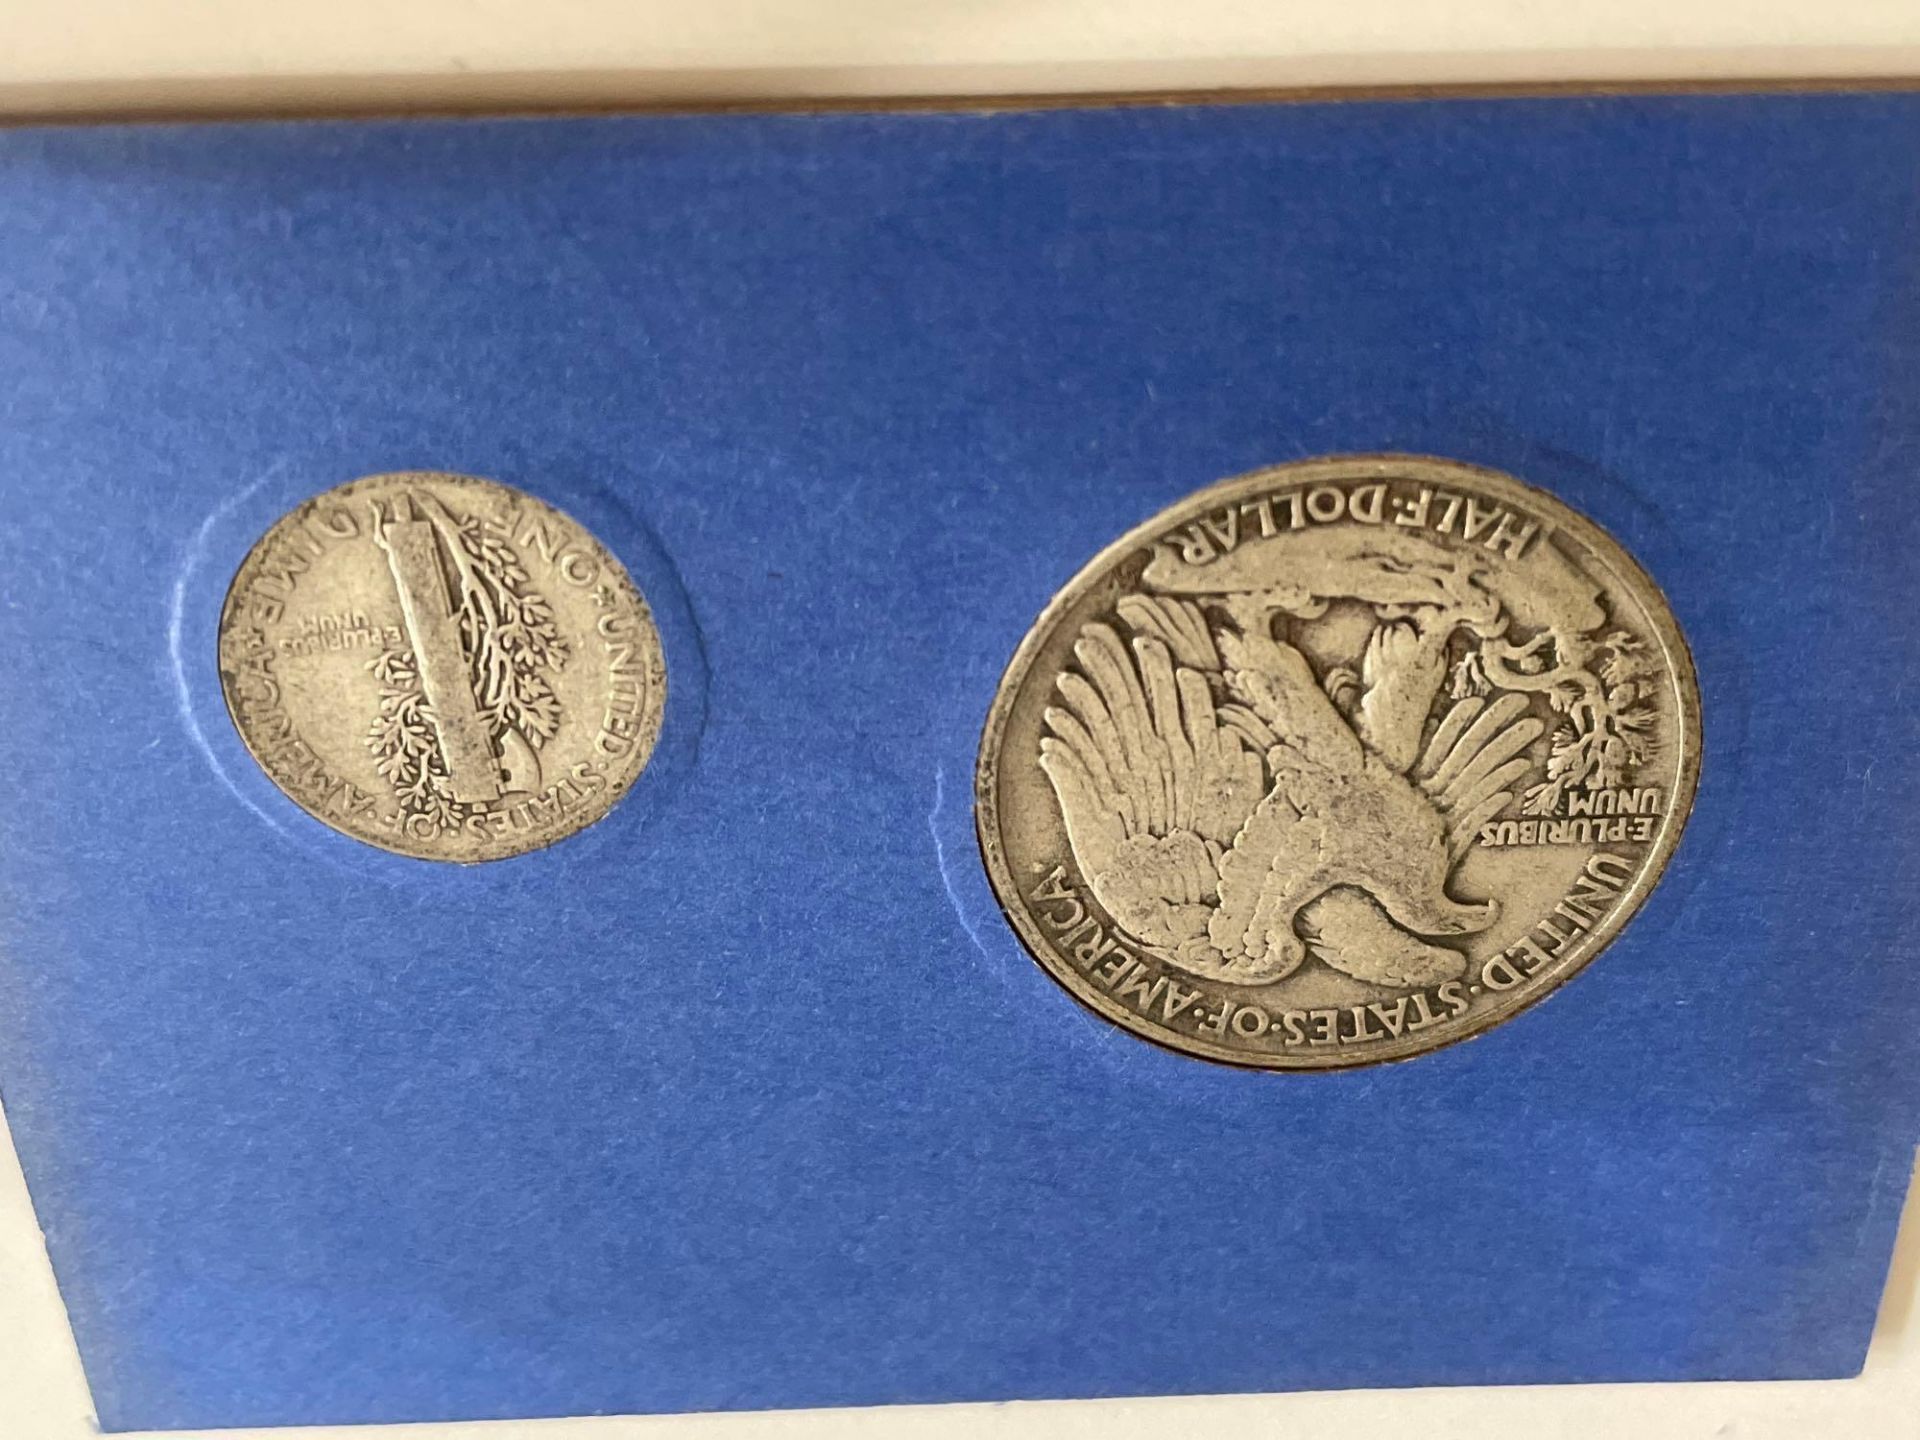 1776-1976 American Revolution Bicentennial, Two Silver Classics: Liberty Walking Half Dollar & Mercu - Image 7 of 8